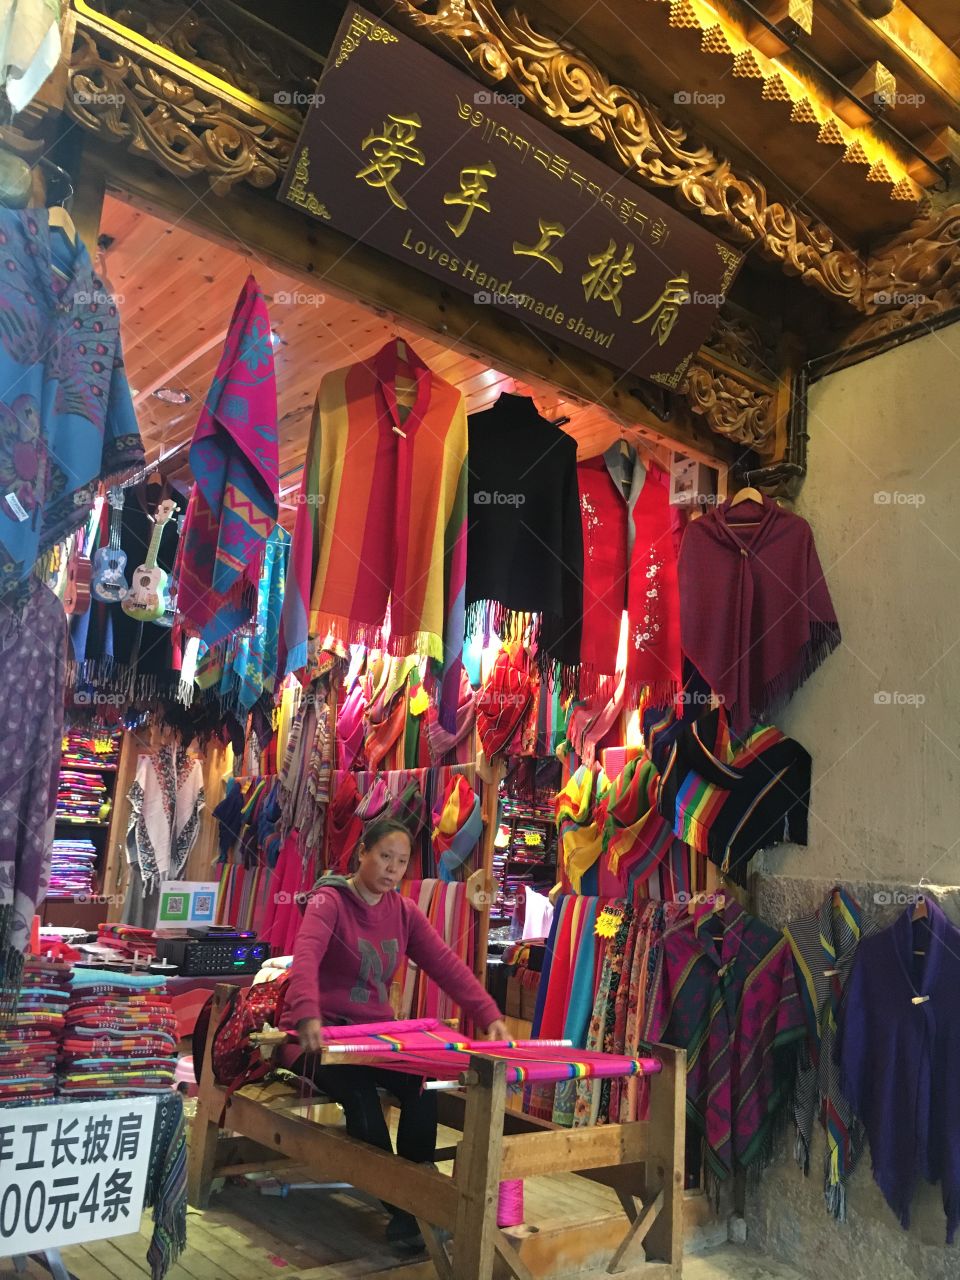 Love hand made shawl, Shangri - La, China